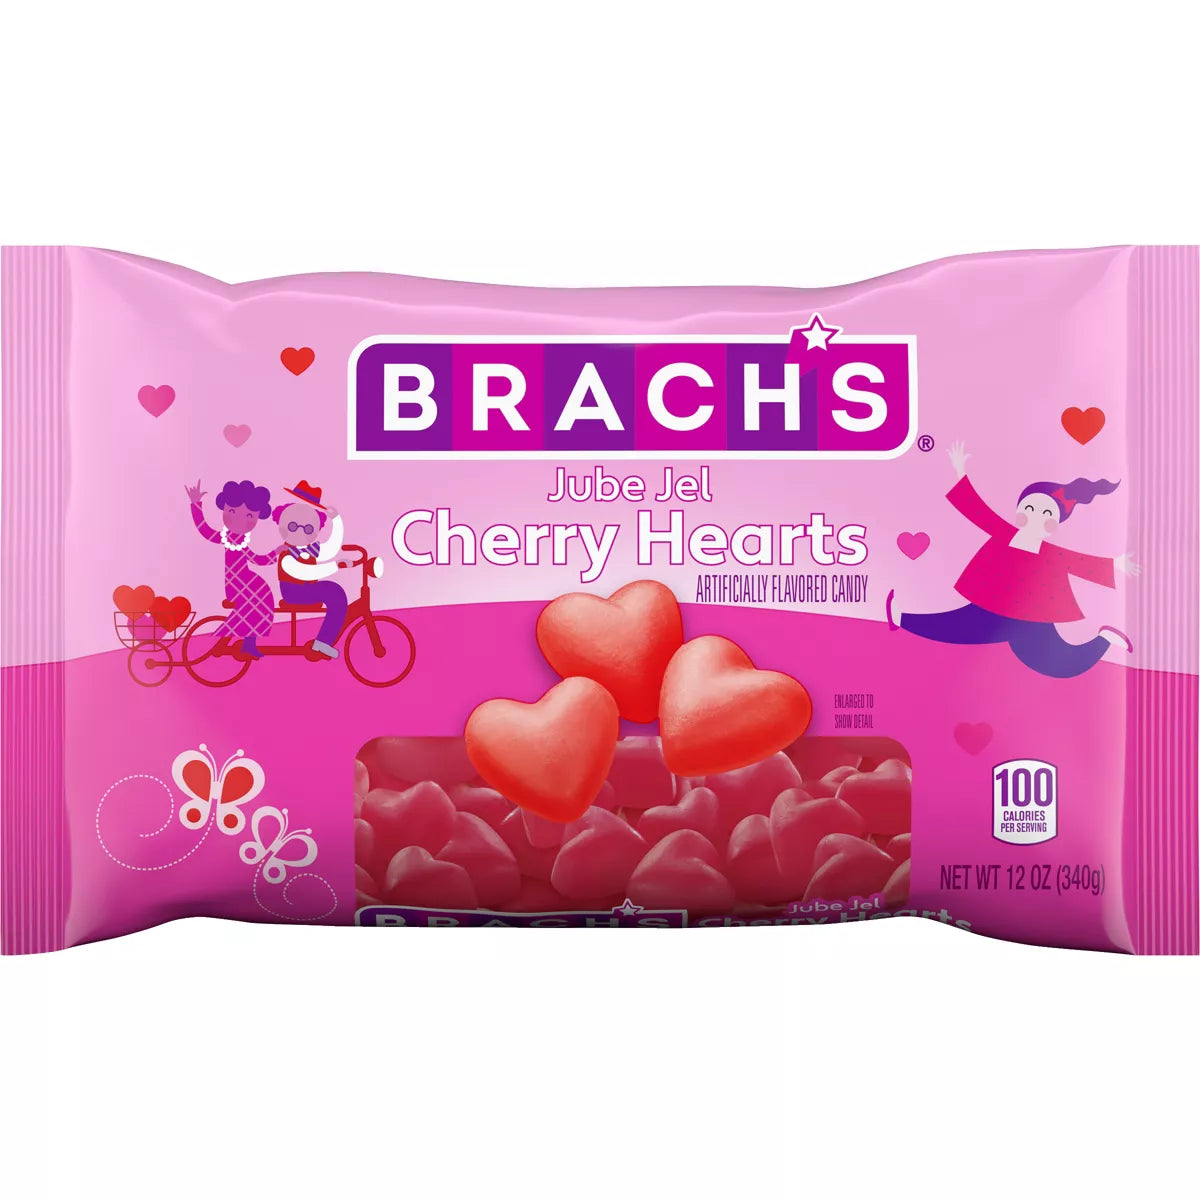 Brach's Valentine's Jube Jel Cherry Hearts - 12oz